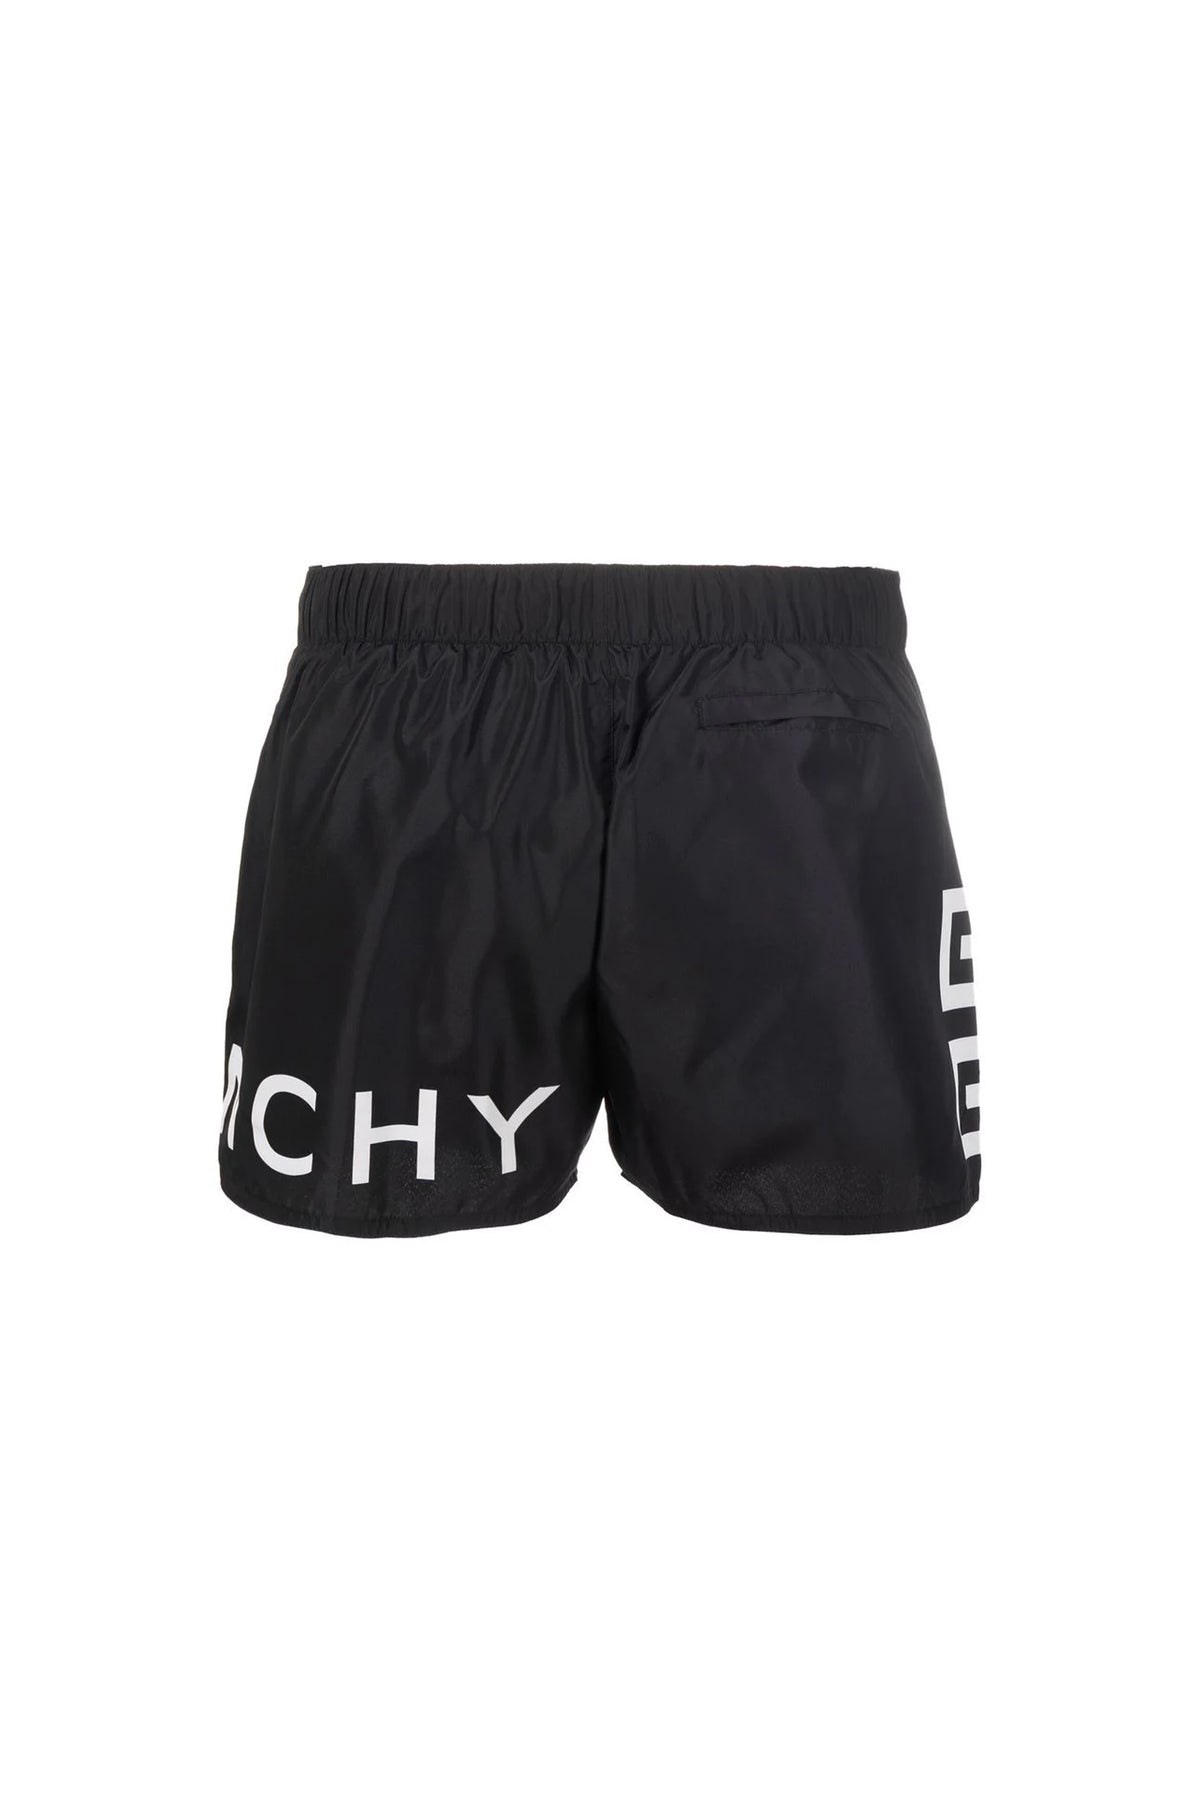 Givenchy logo-print elasticated-waist swim shorts